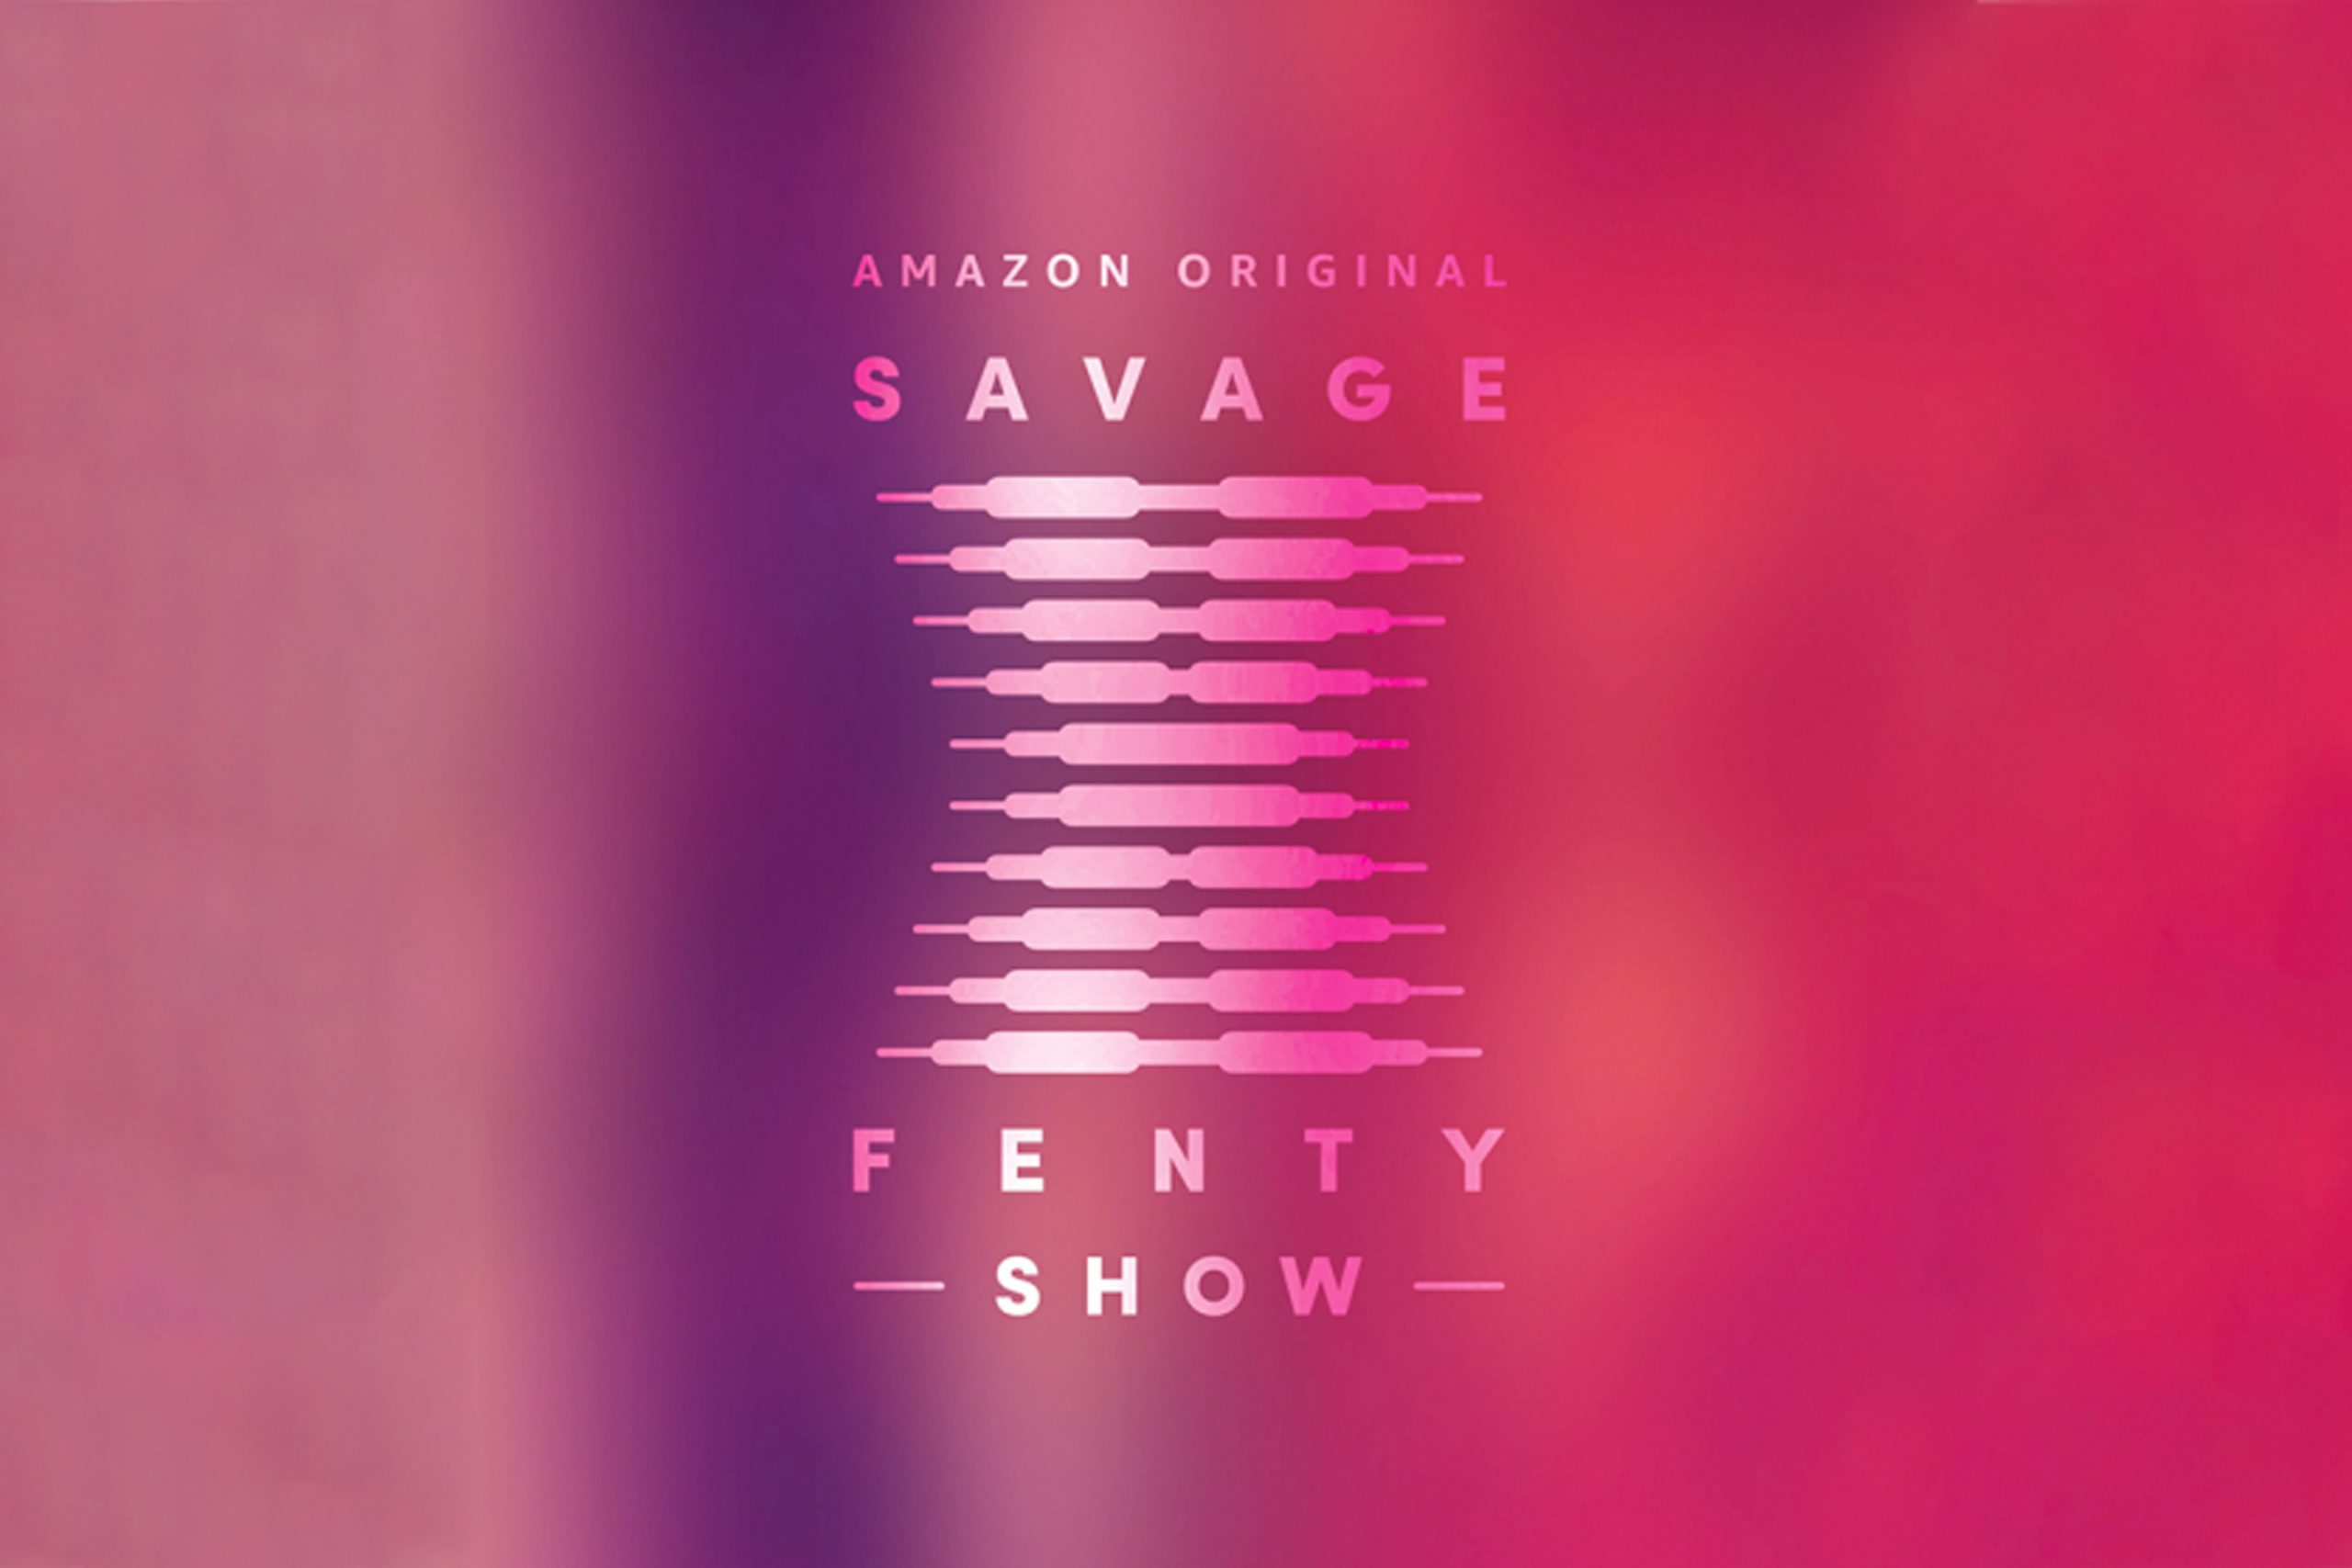 Amazon original Savage Fenty show poster